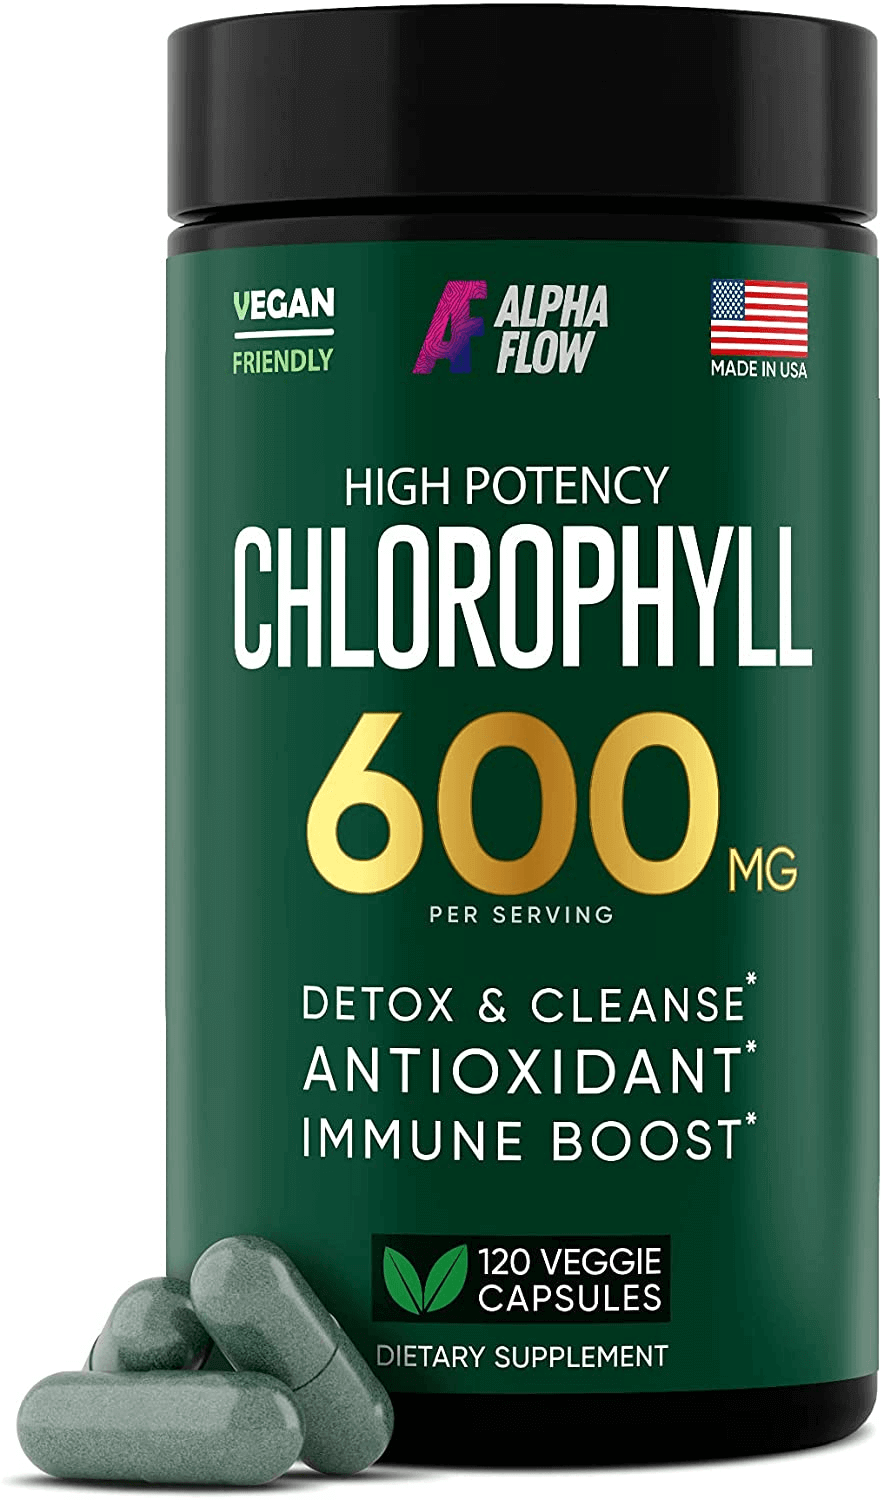 Chlorophyll Capsules 600 Mg - Natural Chlorophyll Pills for Women & Men - Highly Bioavailable Organic Chlorophyll Supplement for Energy, Immunity & Skin Health - Internal Deodorant, Detox & Cleanse - vitamenstore.com